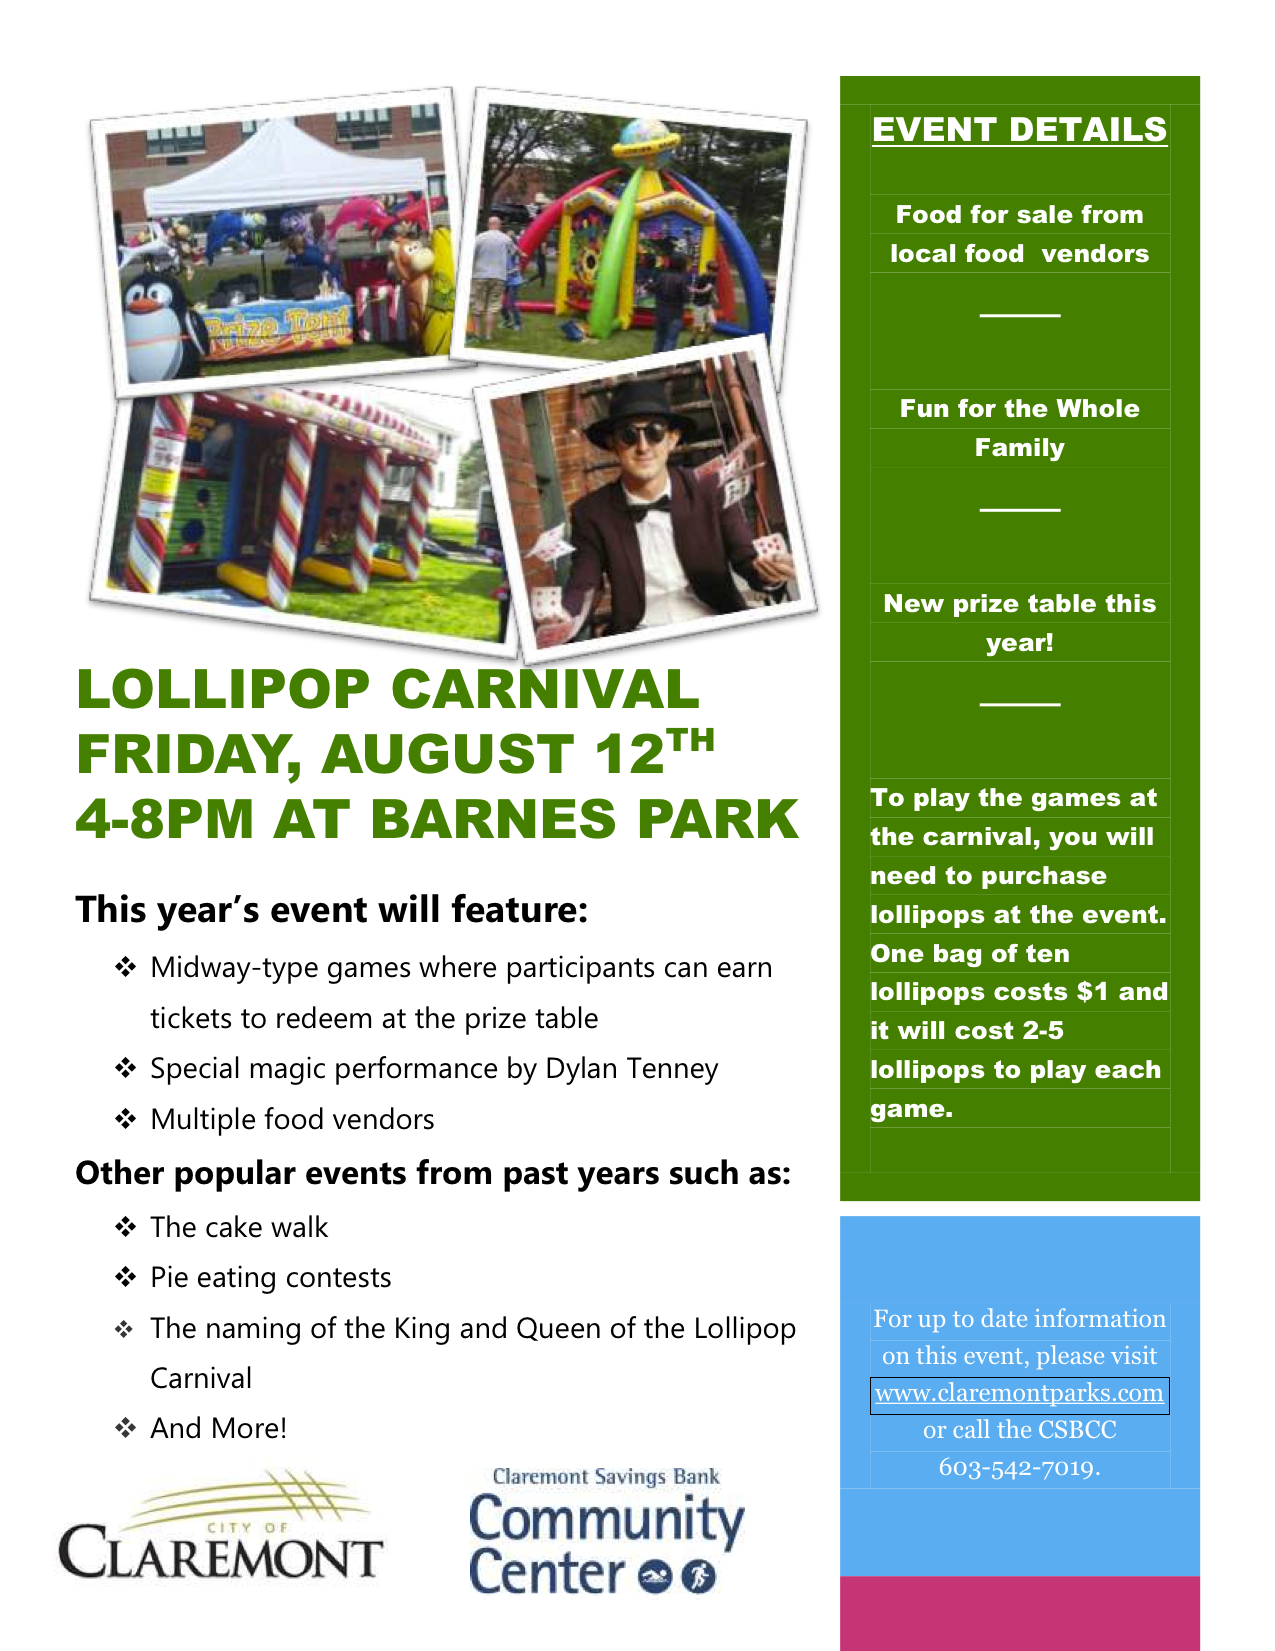 Lollipop Carnival Coming Up Soon!